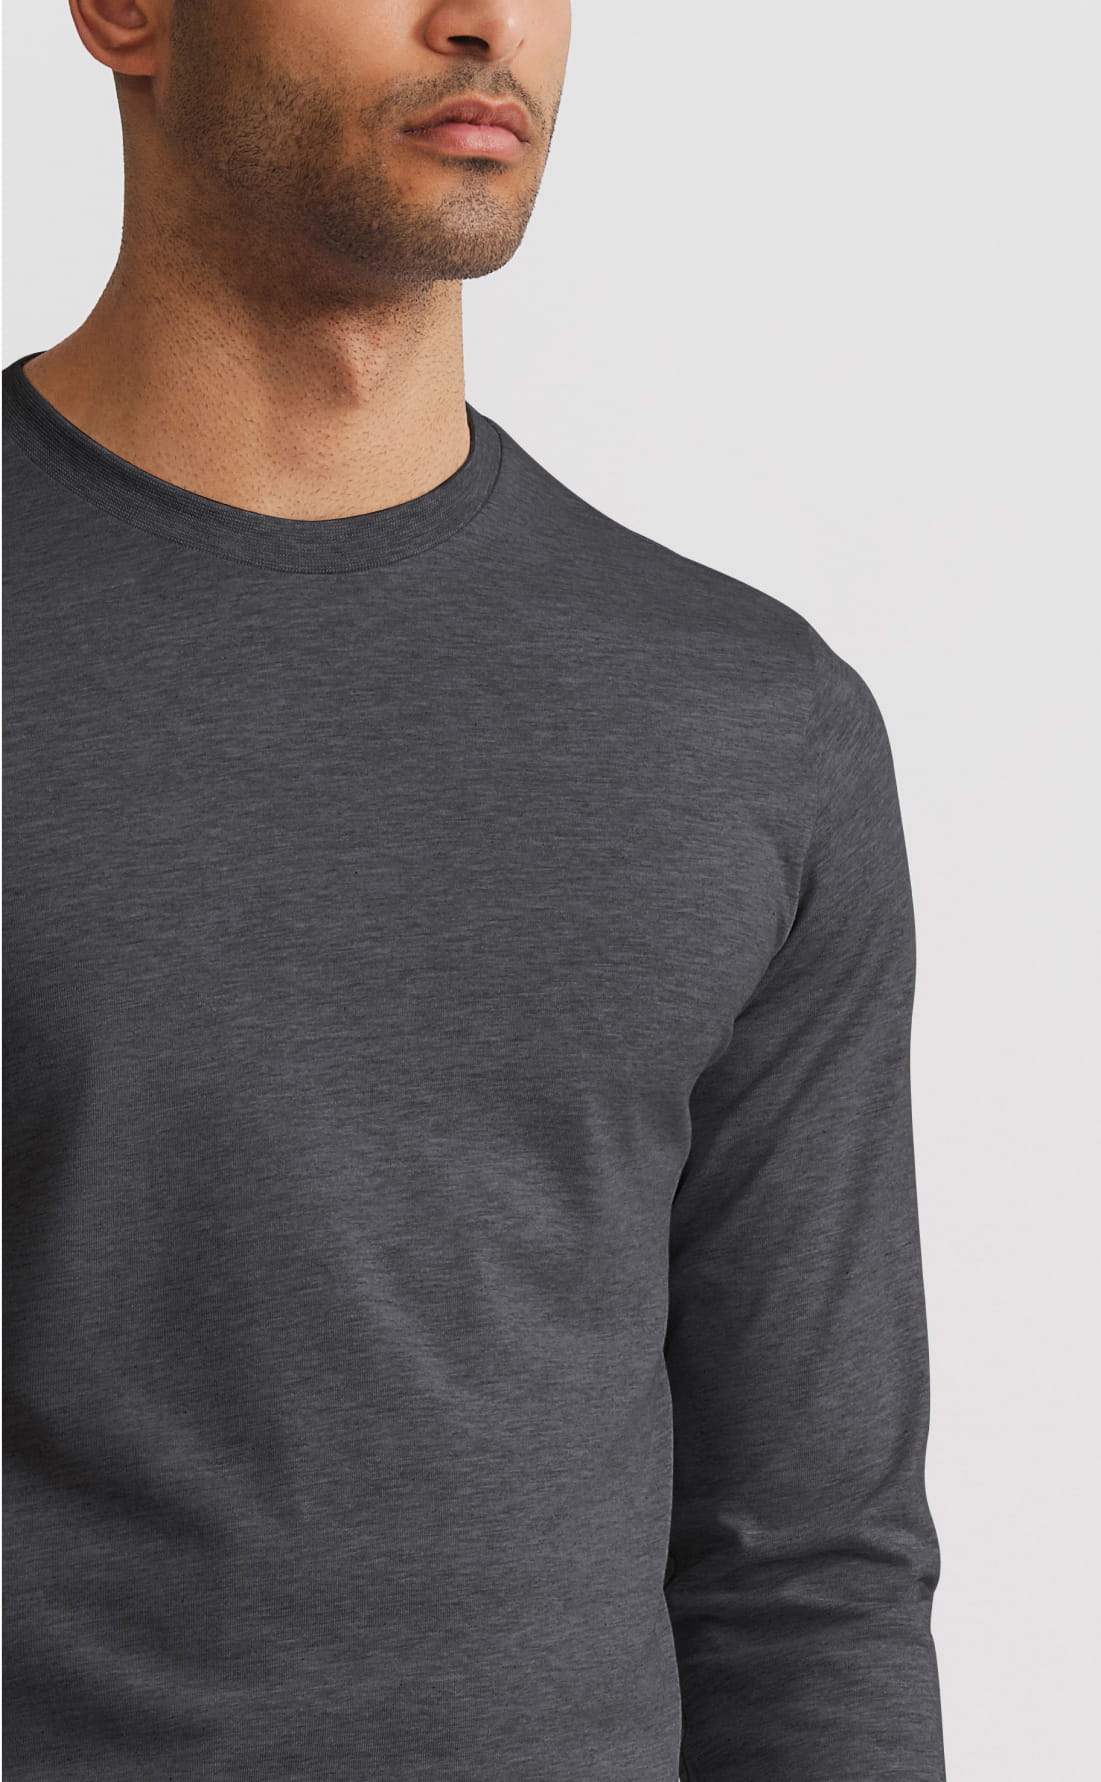 Custom Fitted Cotton T-Shirt / Long-Sleeve Dark Grey